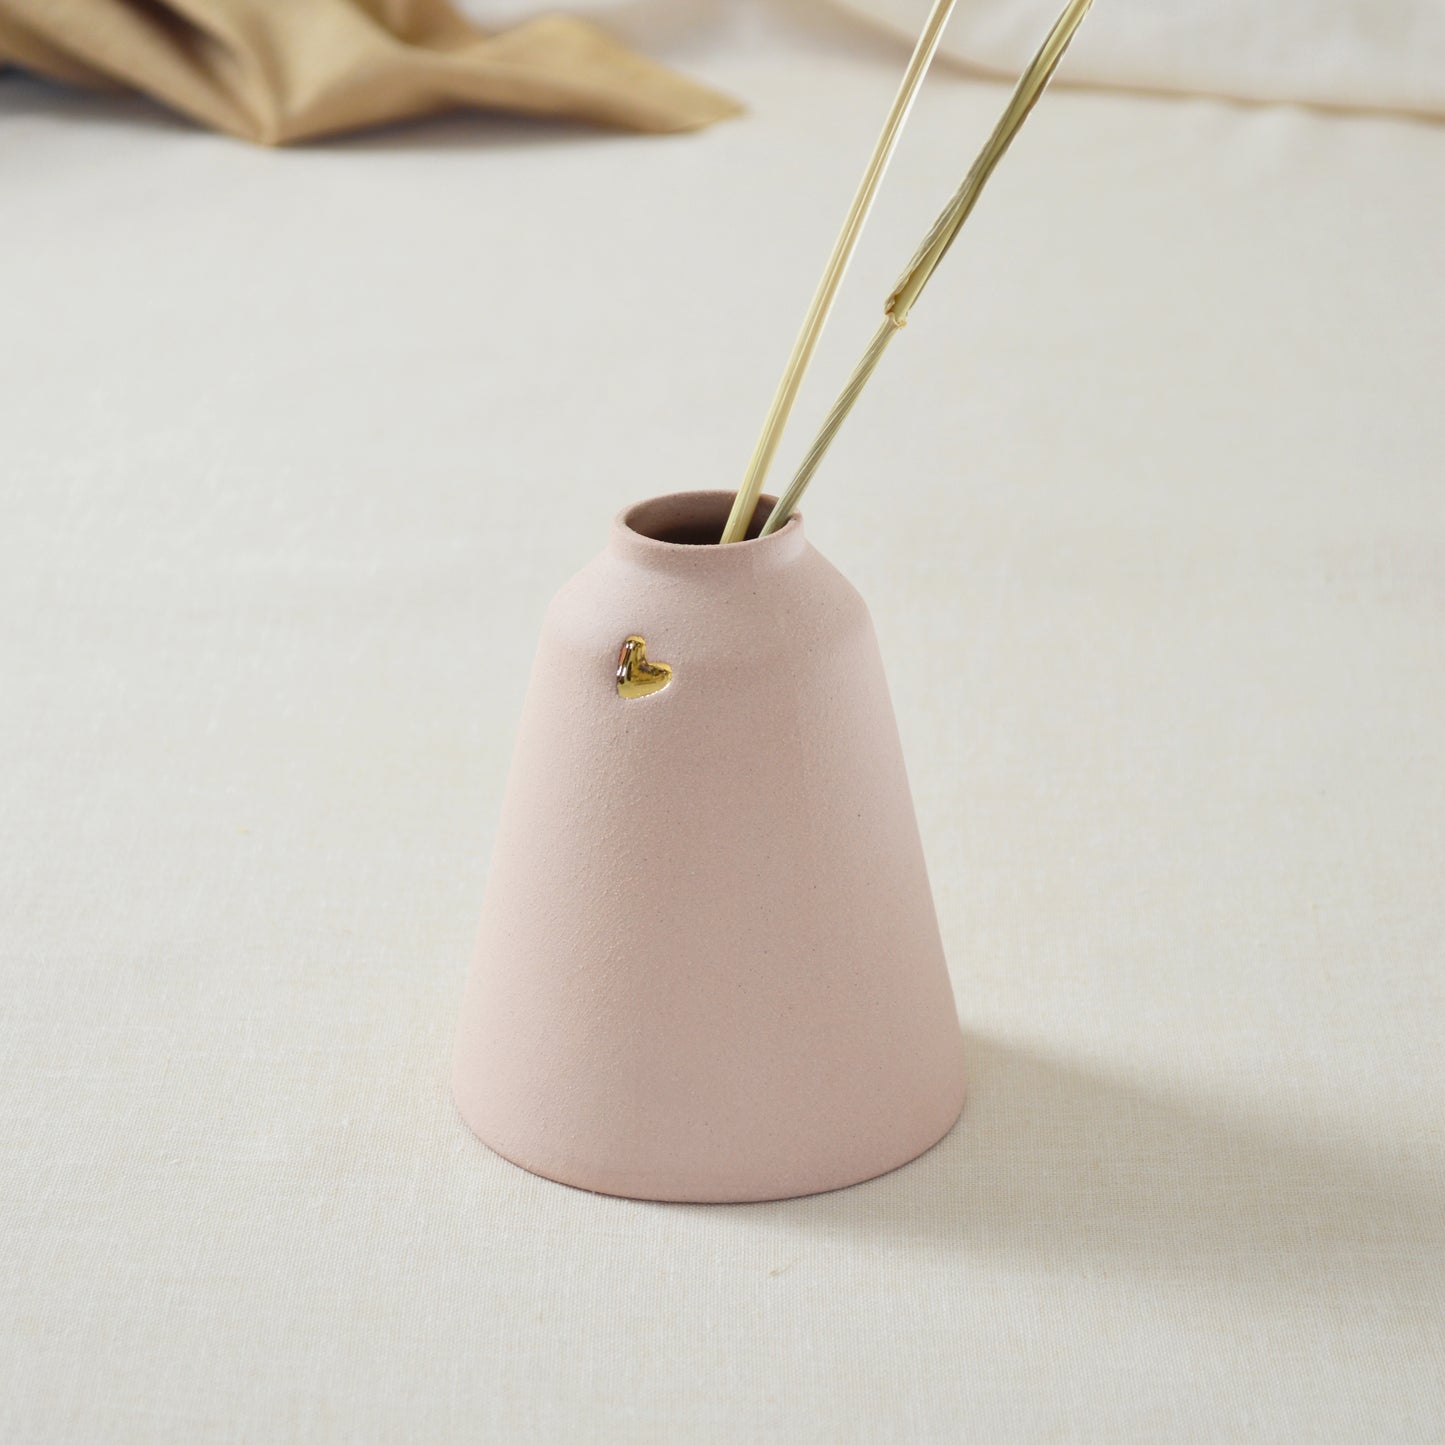 Pastel Pink Ceramic Angled Vase With A Gold Embossed Heart | Stoneware Vase | Flower Vase